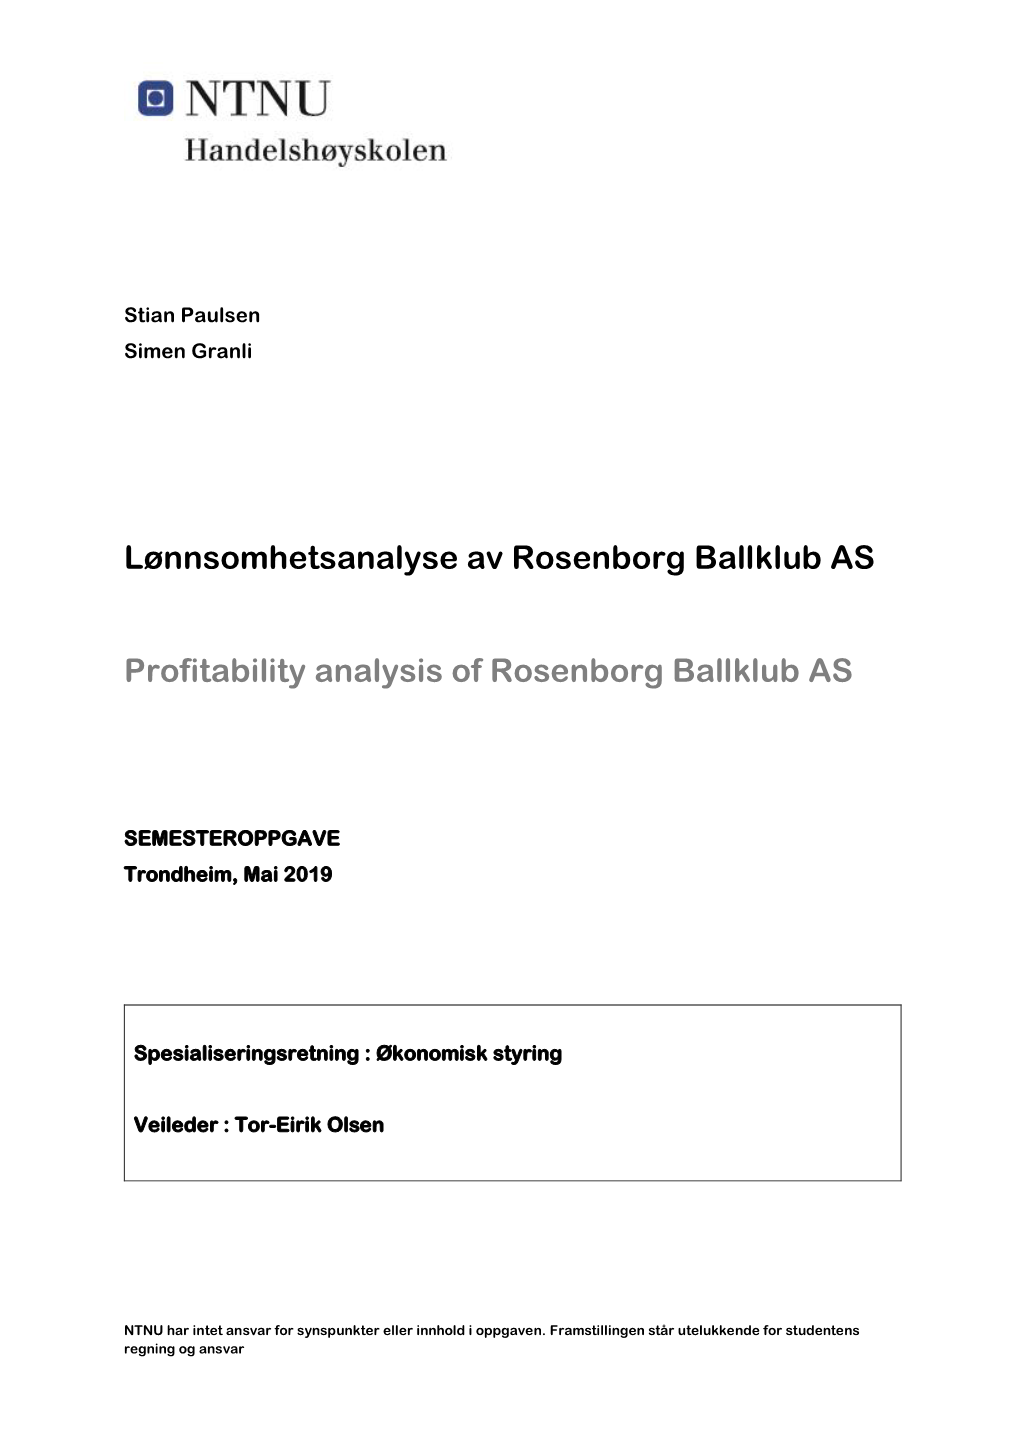 Profitability Analysis of Rosenborg Ballklub AS